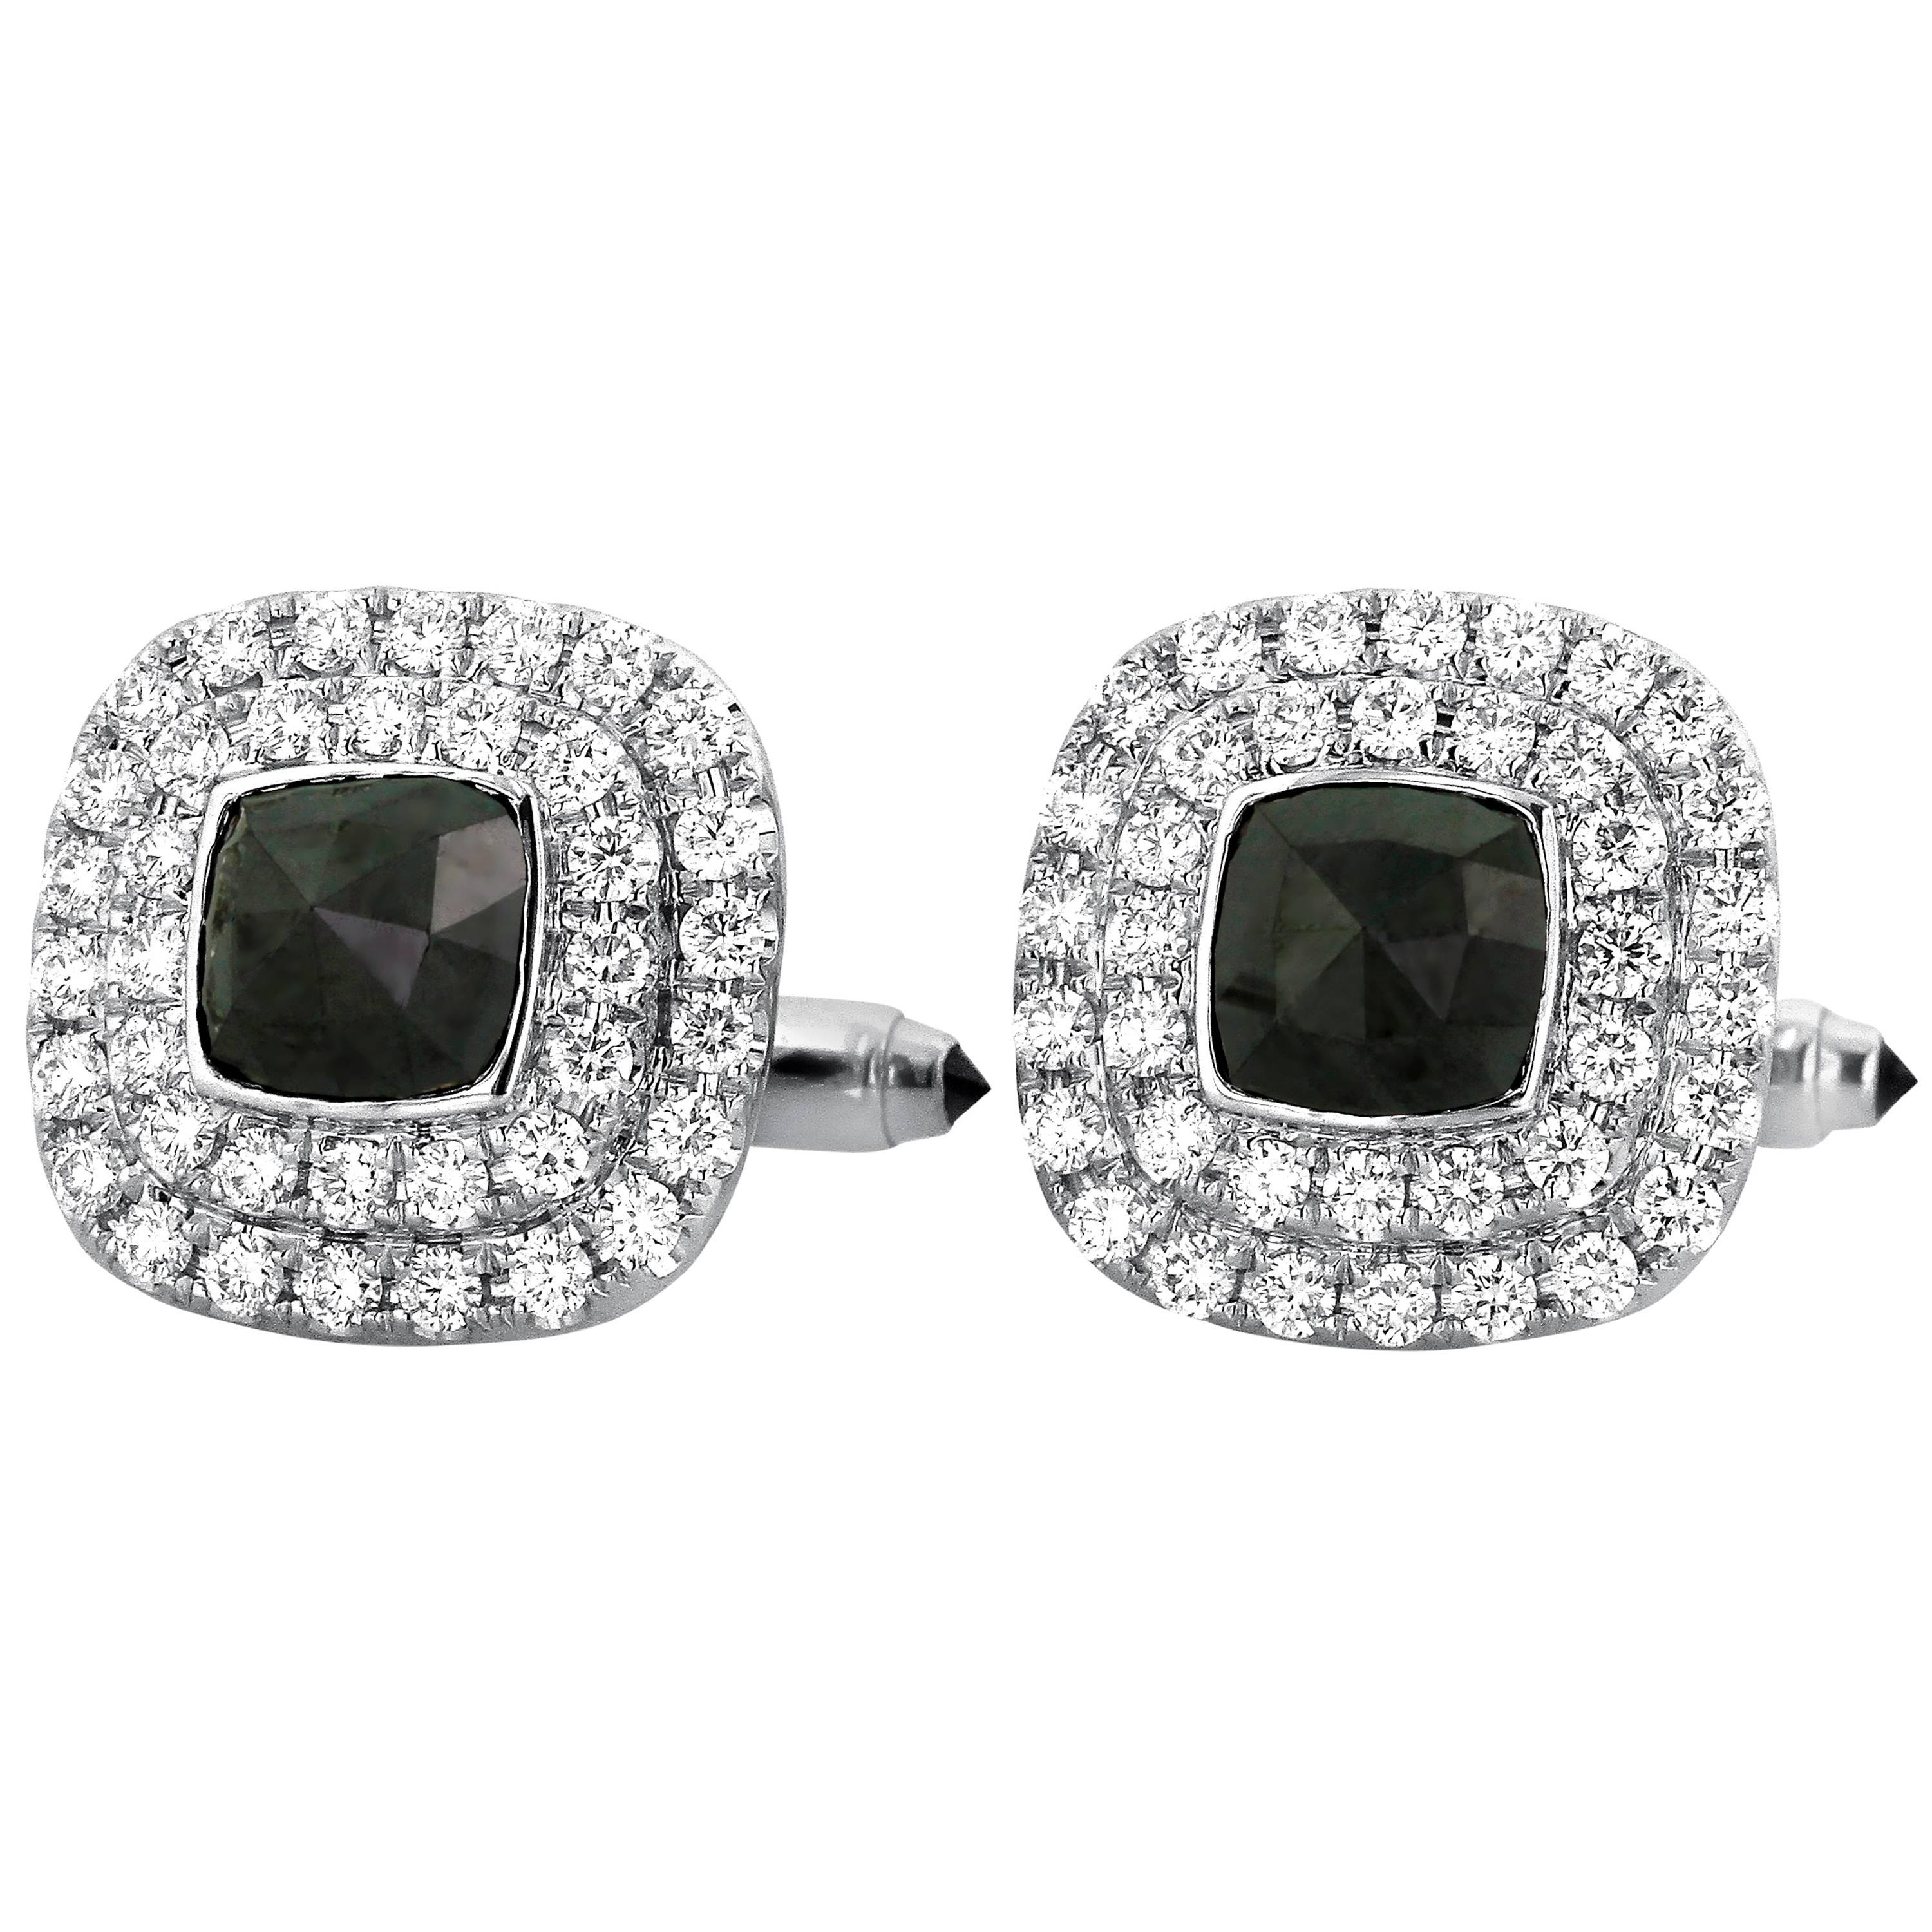 Yael Designs 5.19 carat Black Diamond White Diamond Cufflinks in Gold 